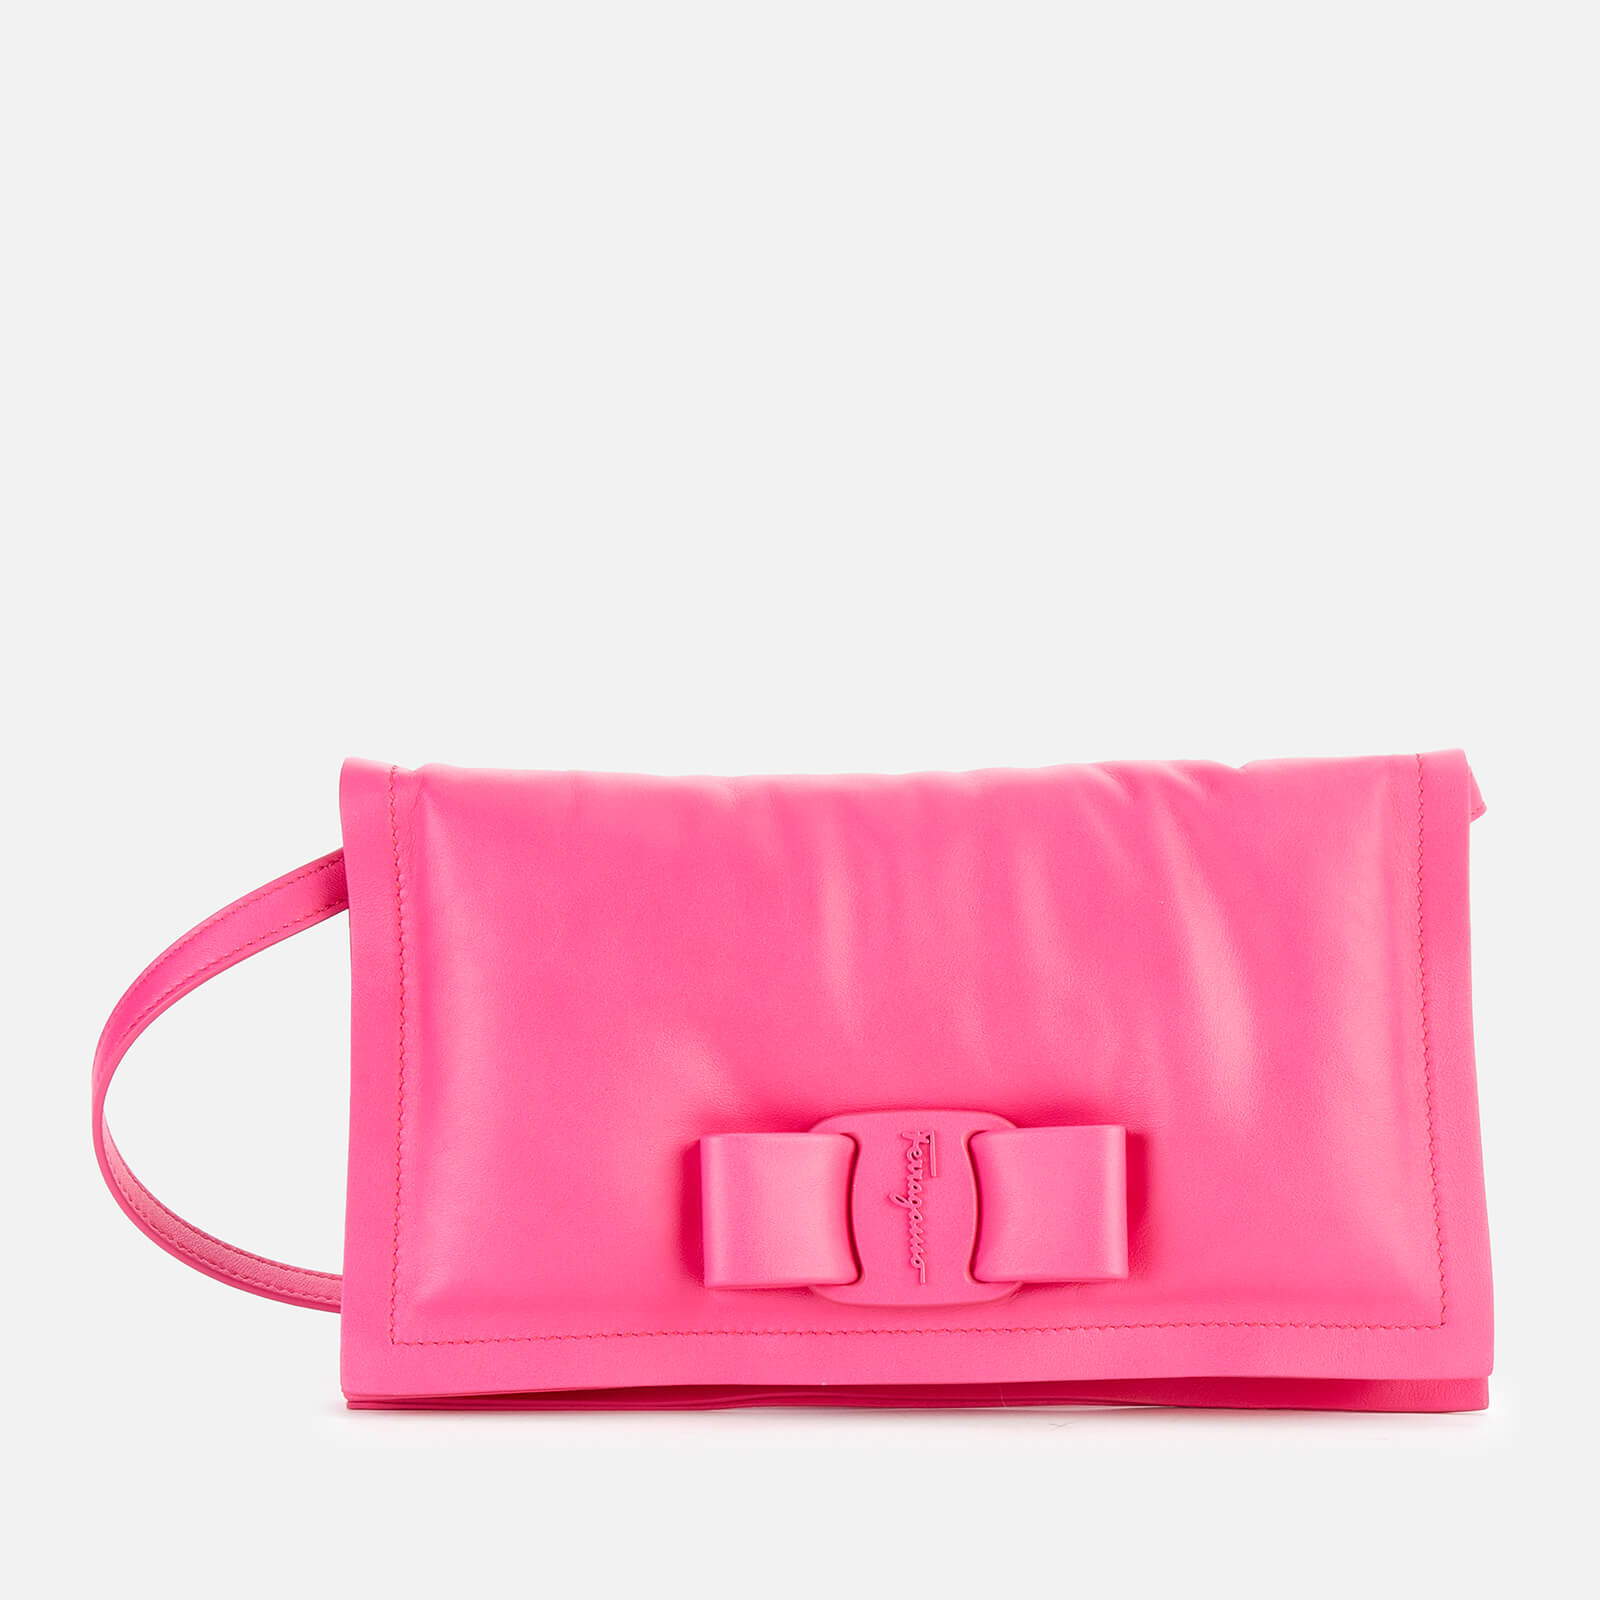 Salvatore Ferragamo Women's Viva Mini Bag - Hot Pink